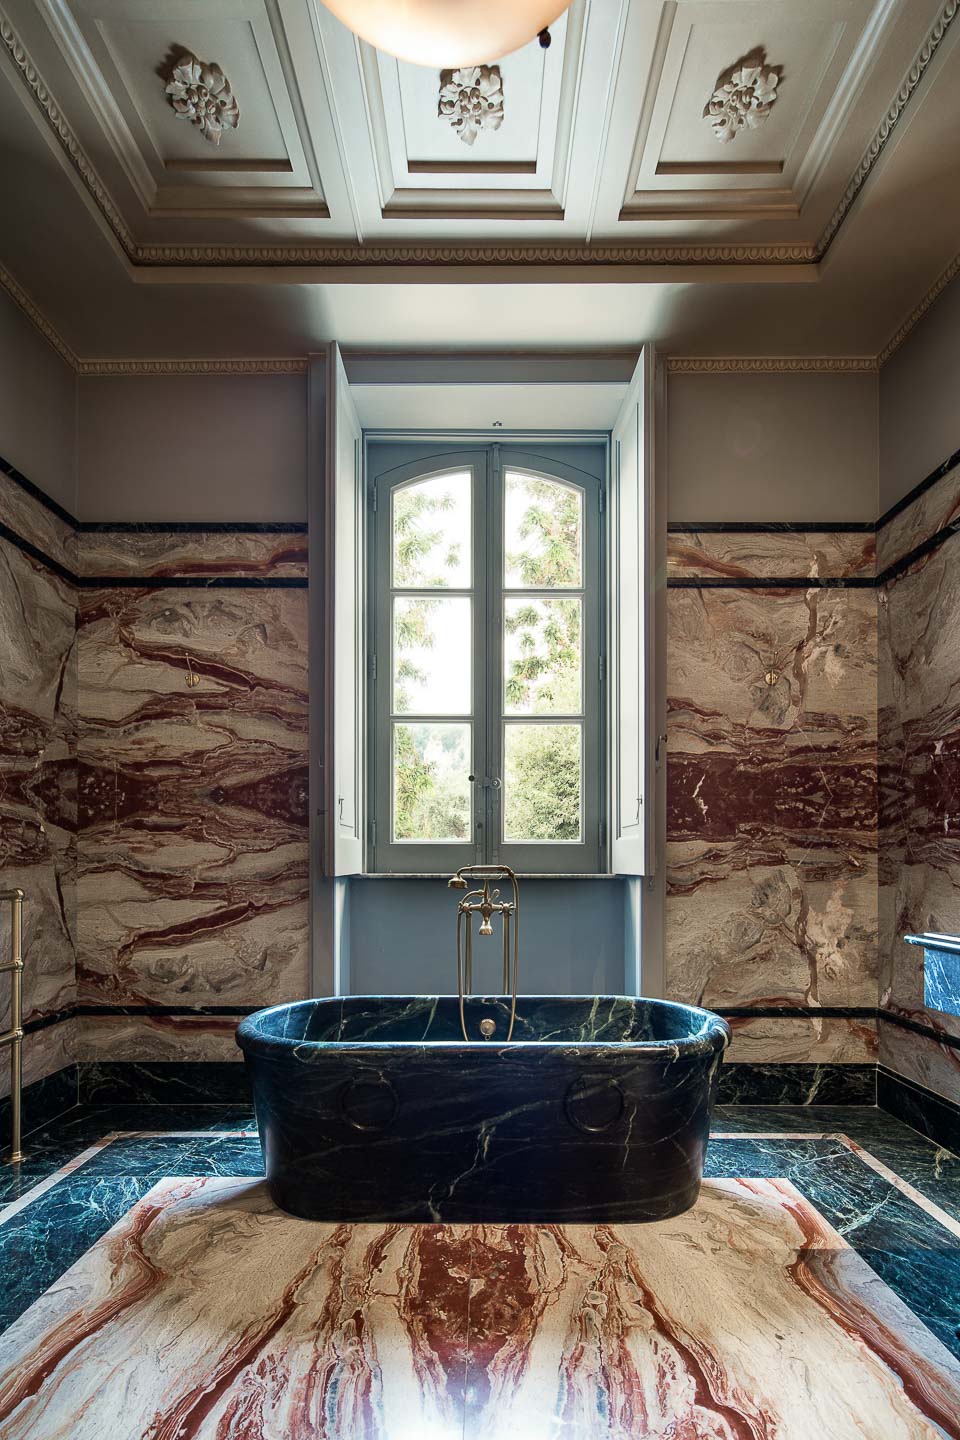 Villa Astor exquisite luxury marble collection best interior design interiordecorator Jacques Garcia French chic arte de vivre The Heritage Collection